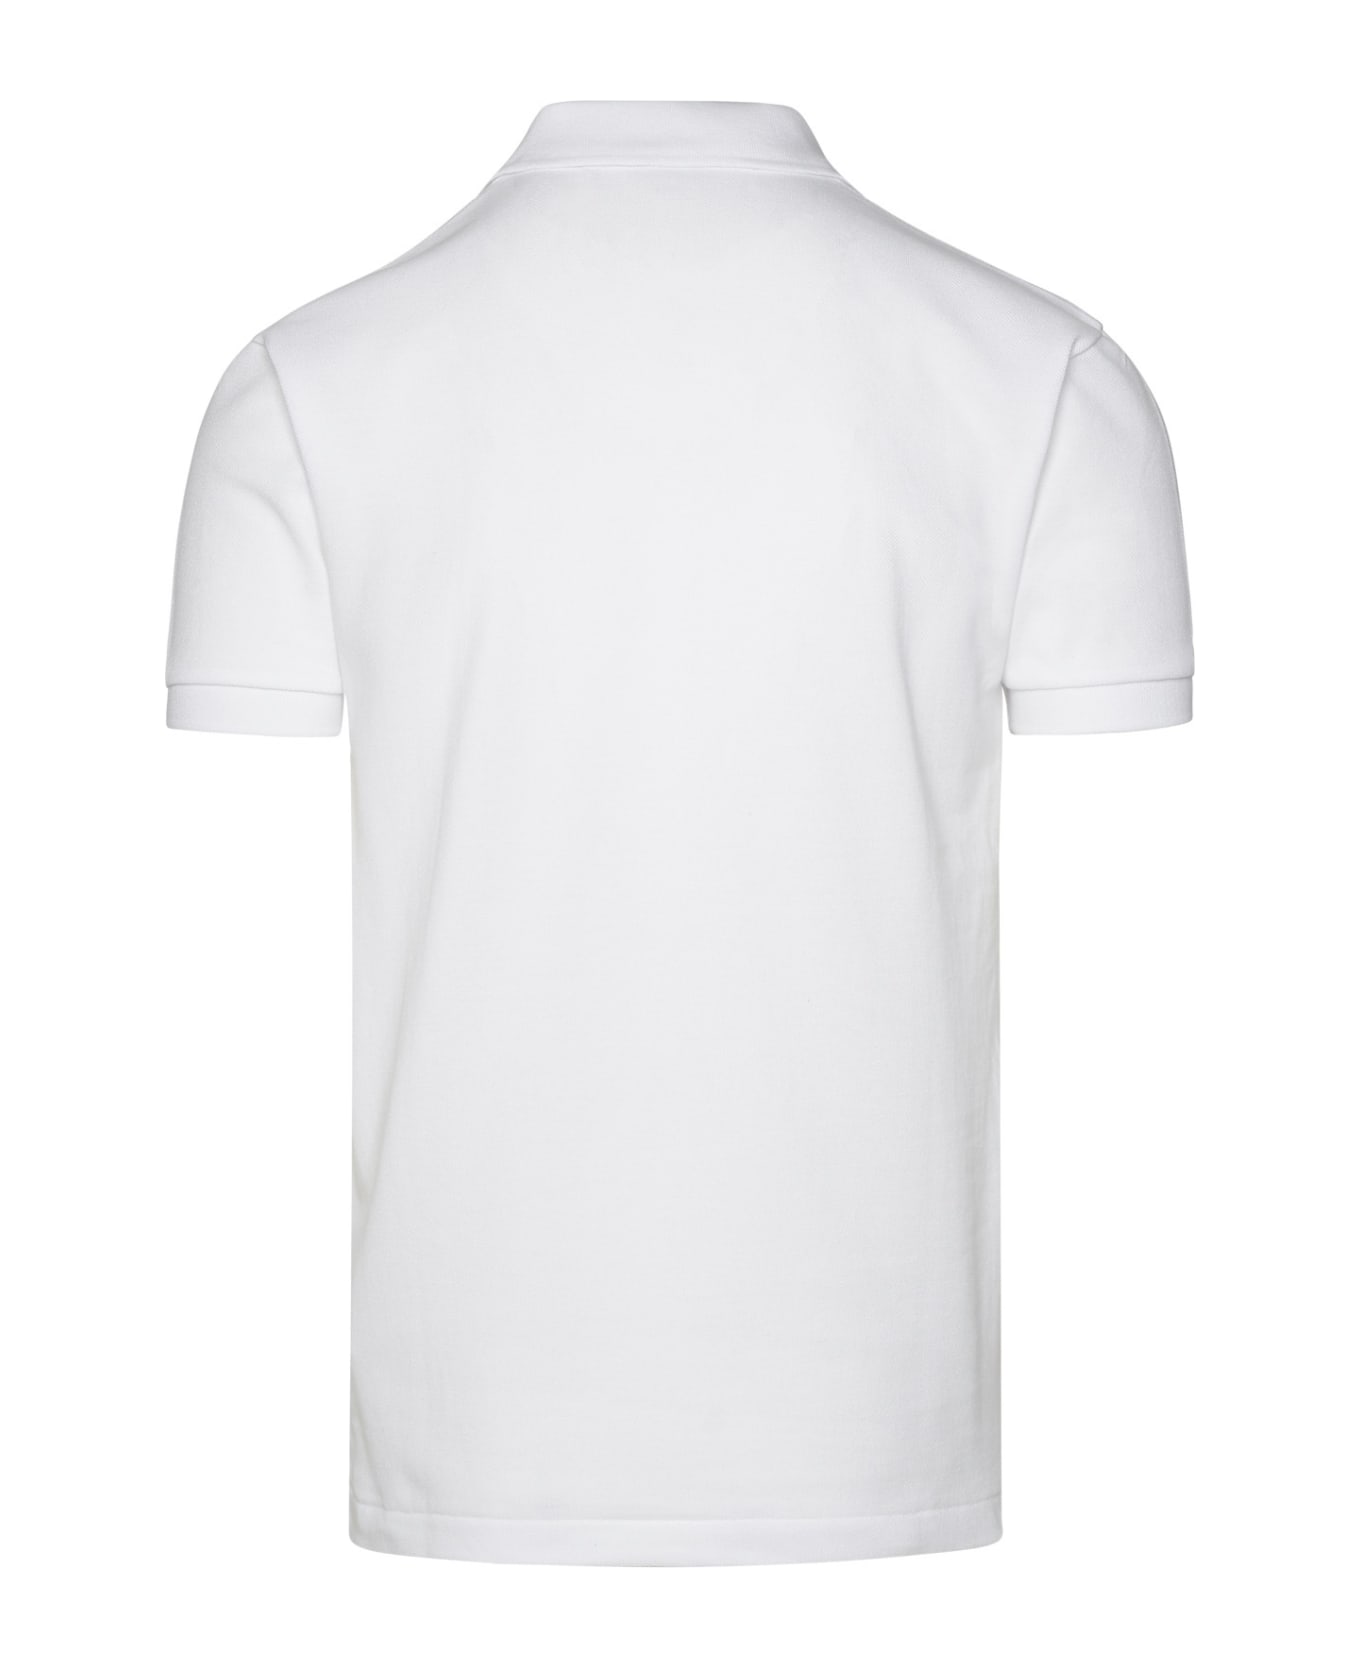 Comme des Garçons Play White Cotton Polo Shirt - White ポロシャツ